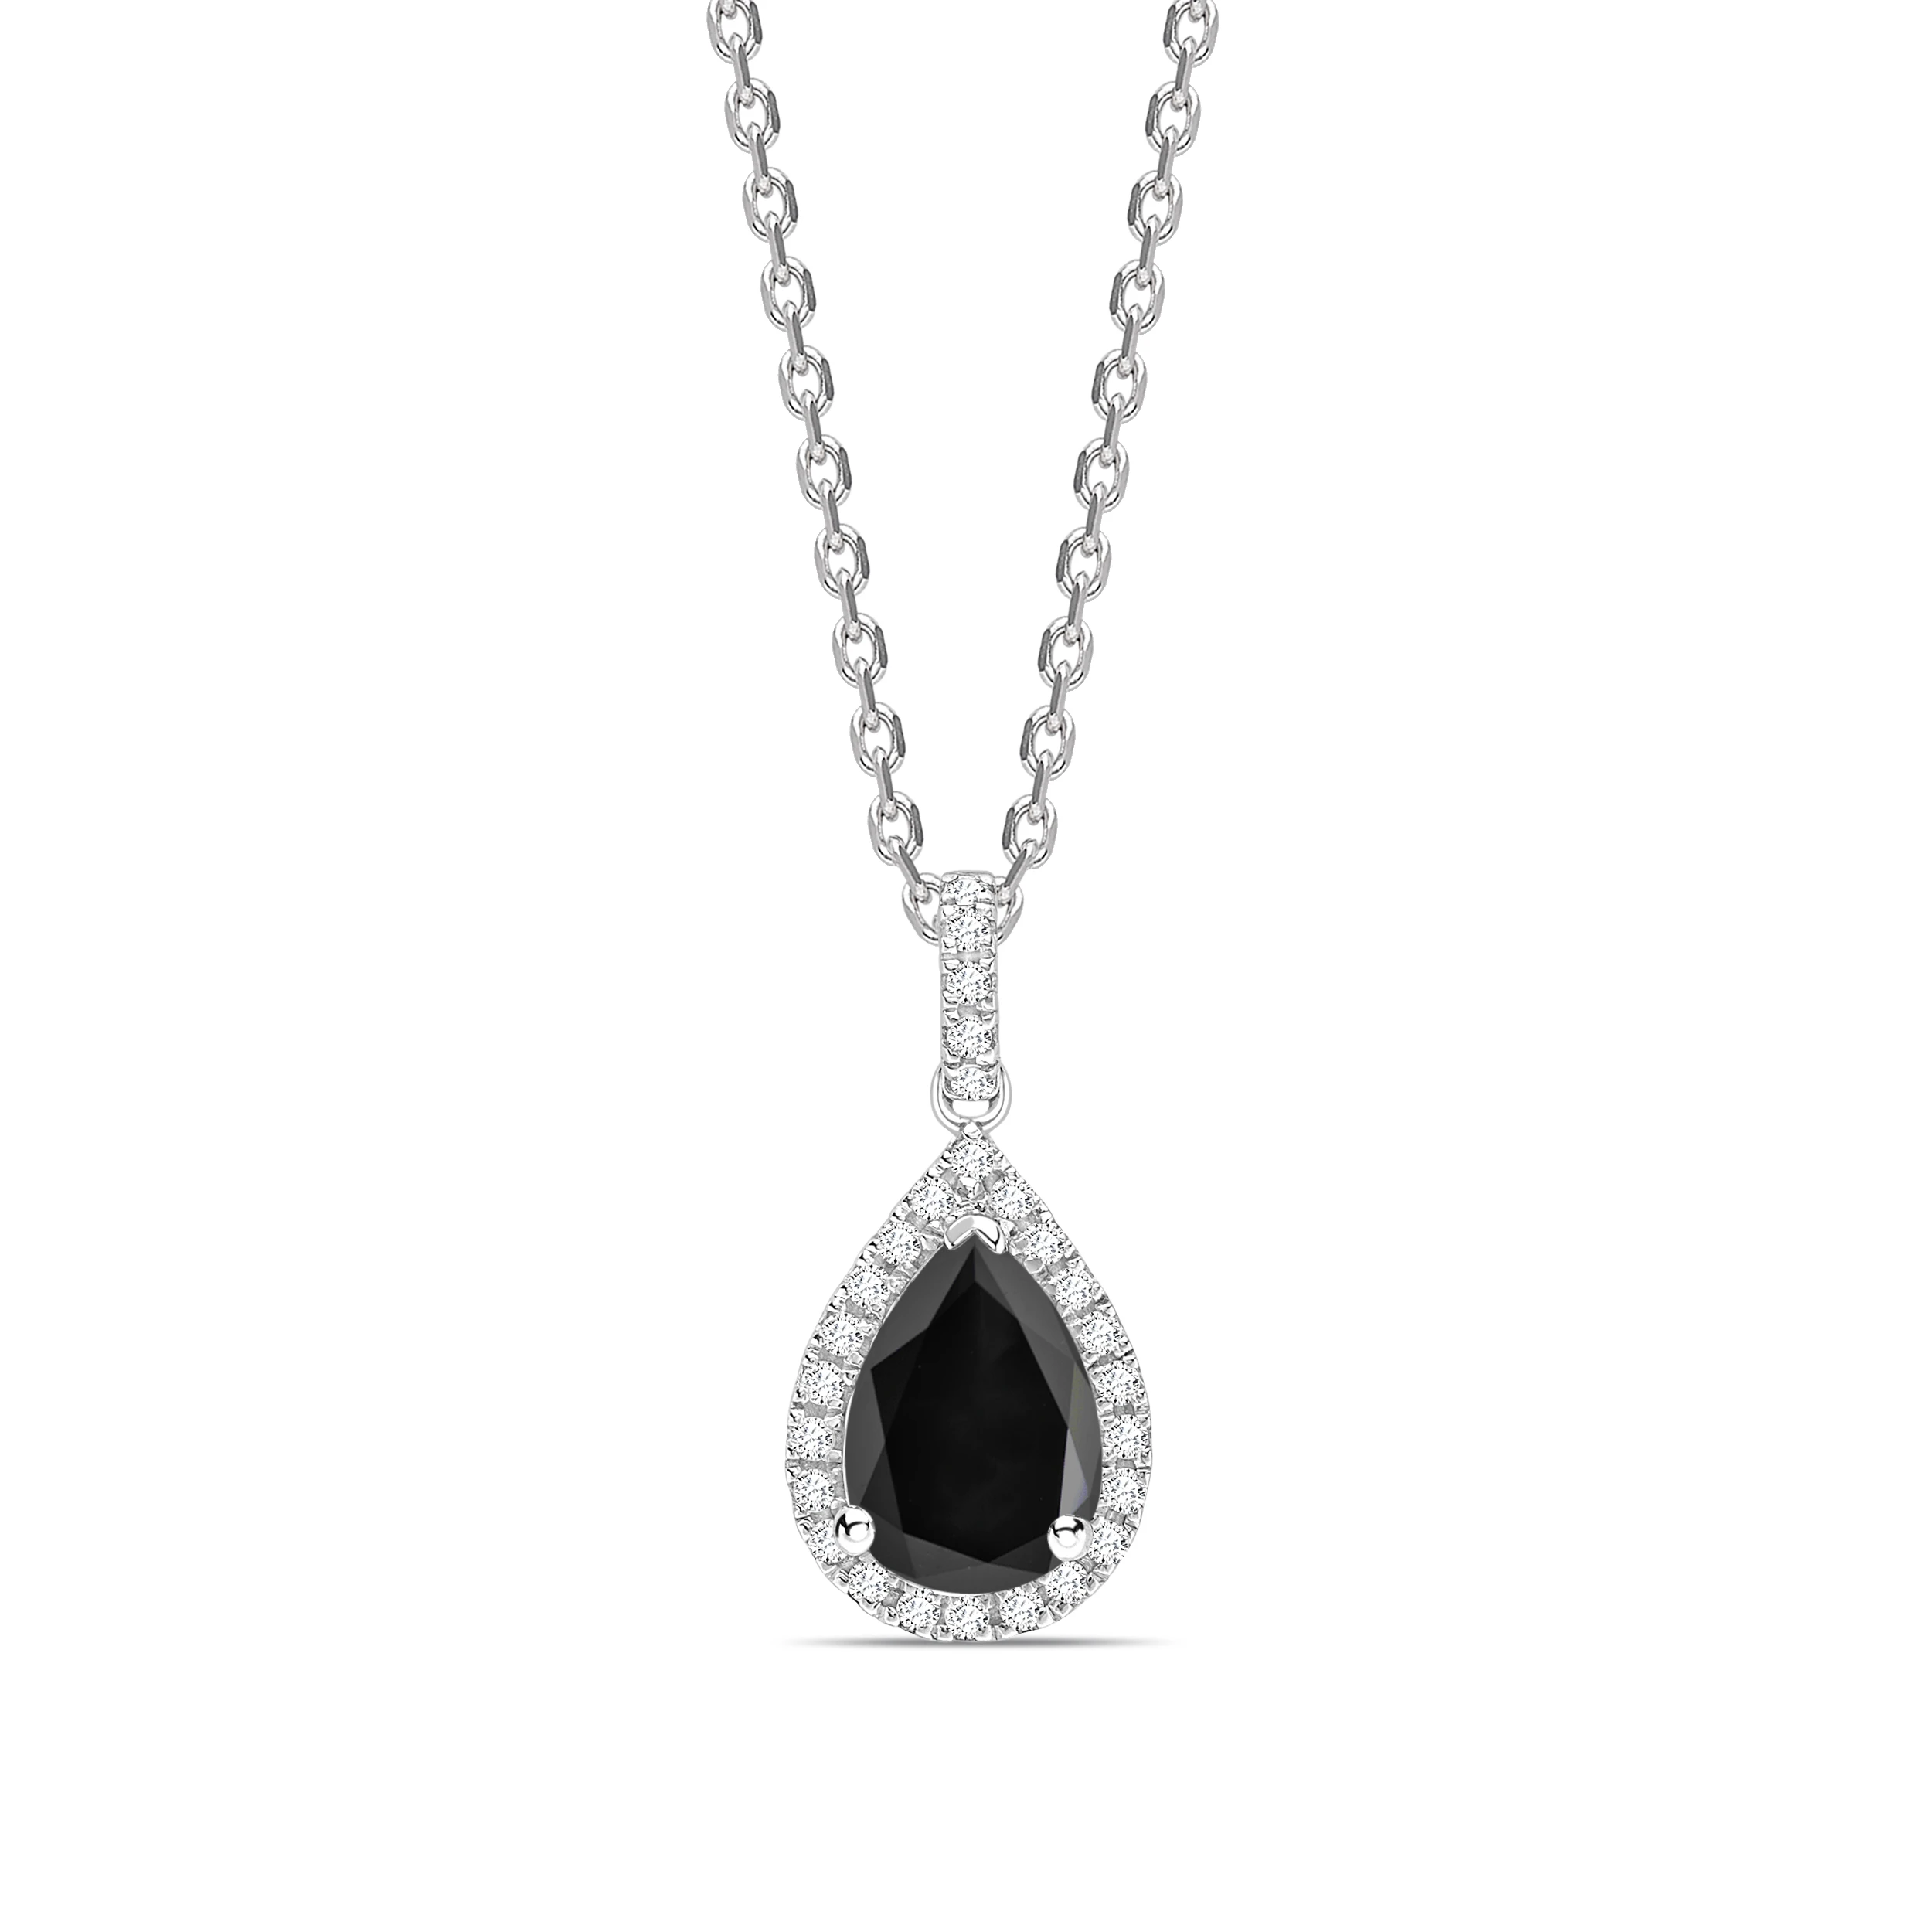 Halo Style Pear Cut Black Diamond Solitaire Pendants Necklace